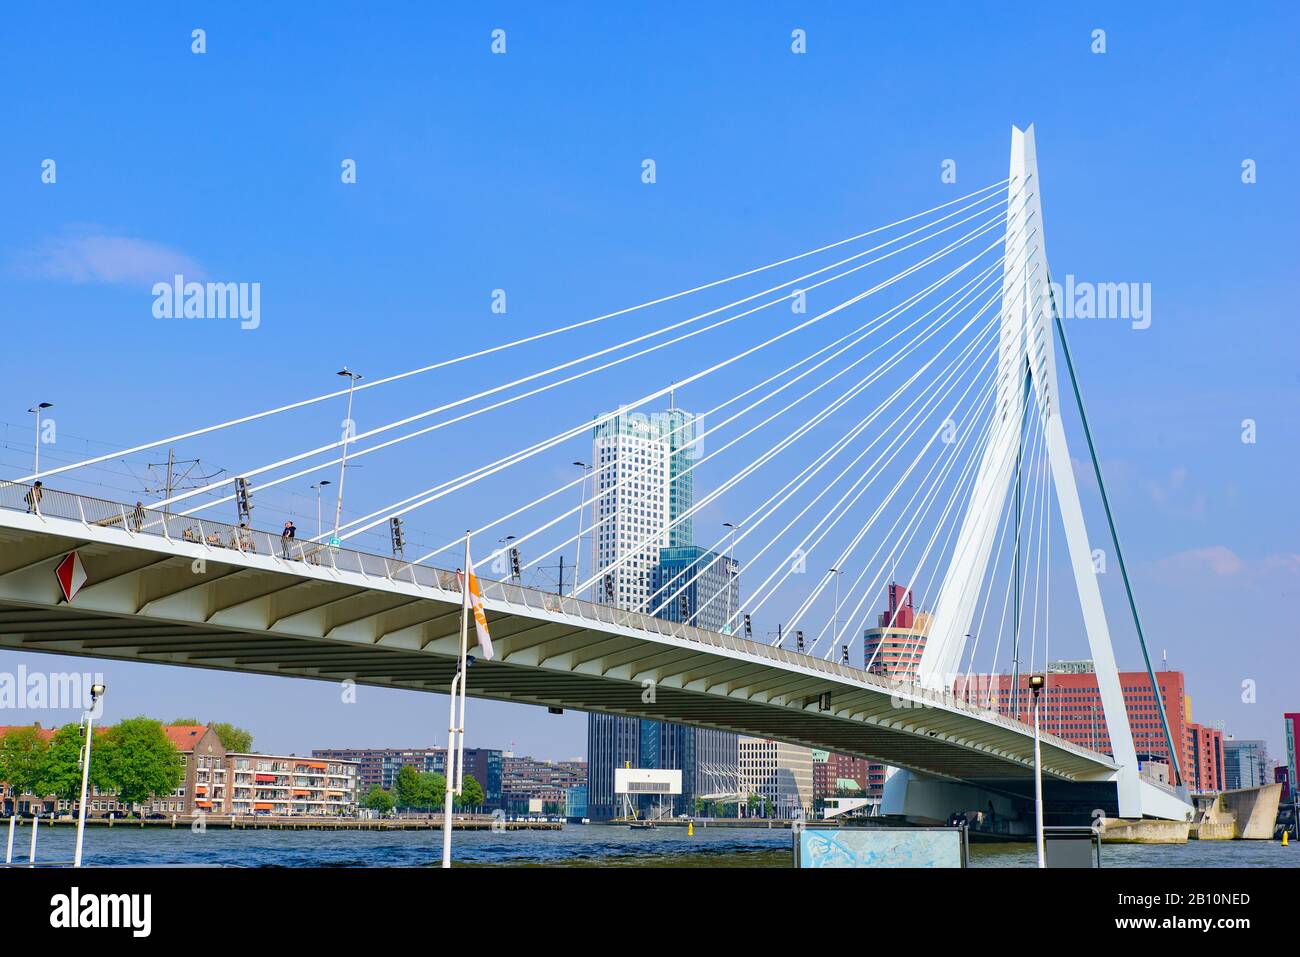 Erasmusbrug, an bridge in the center of Rotterdam, Netherlands Stock Photo